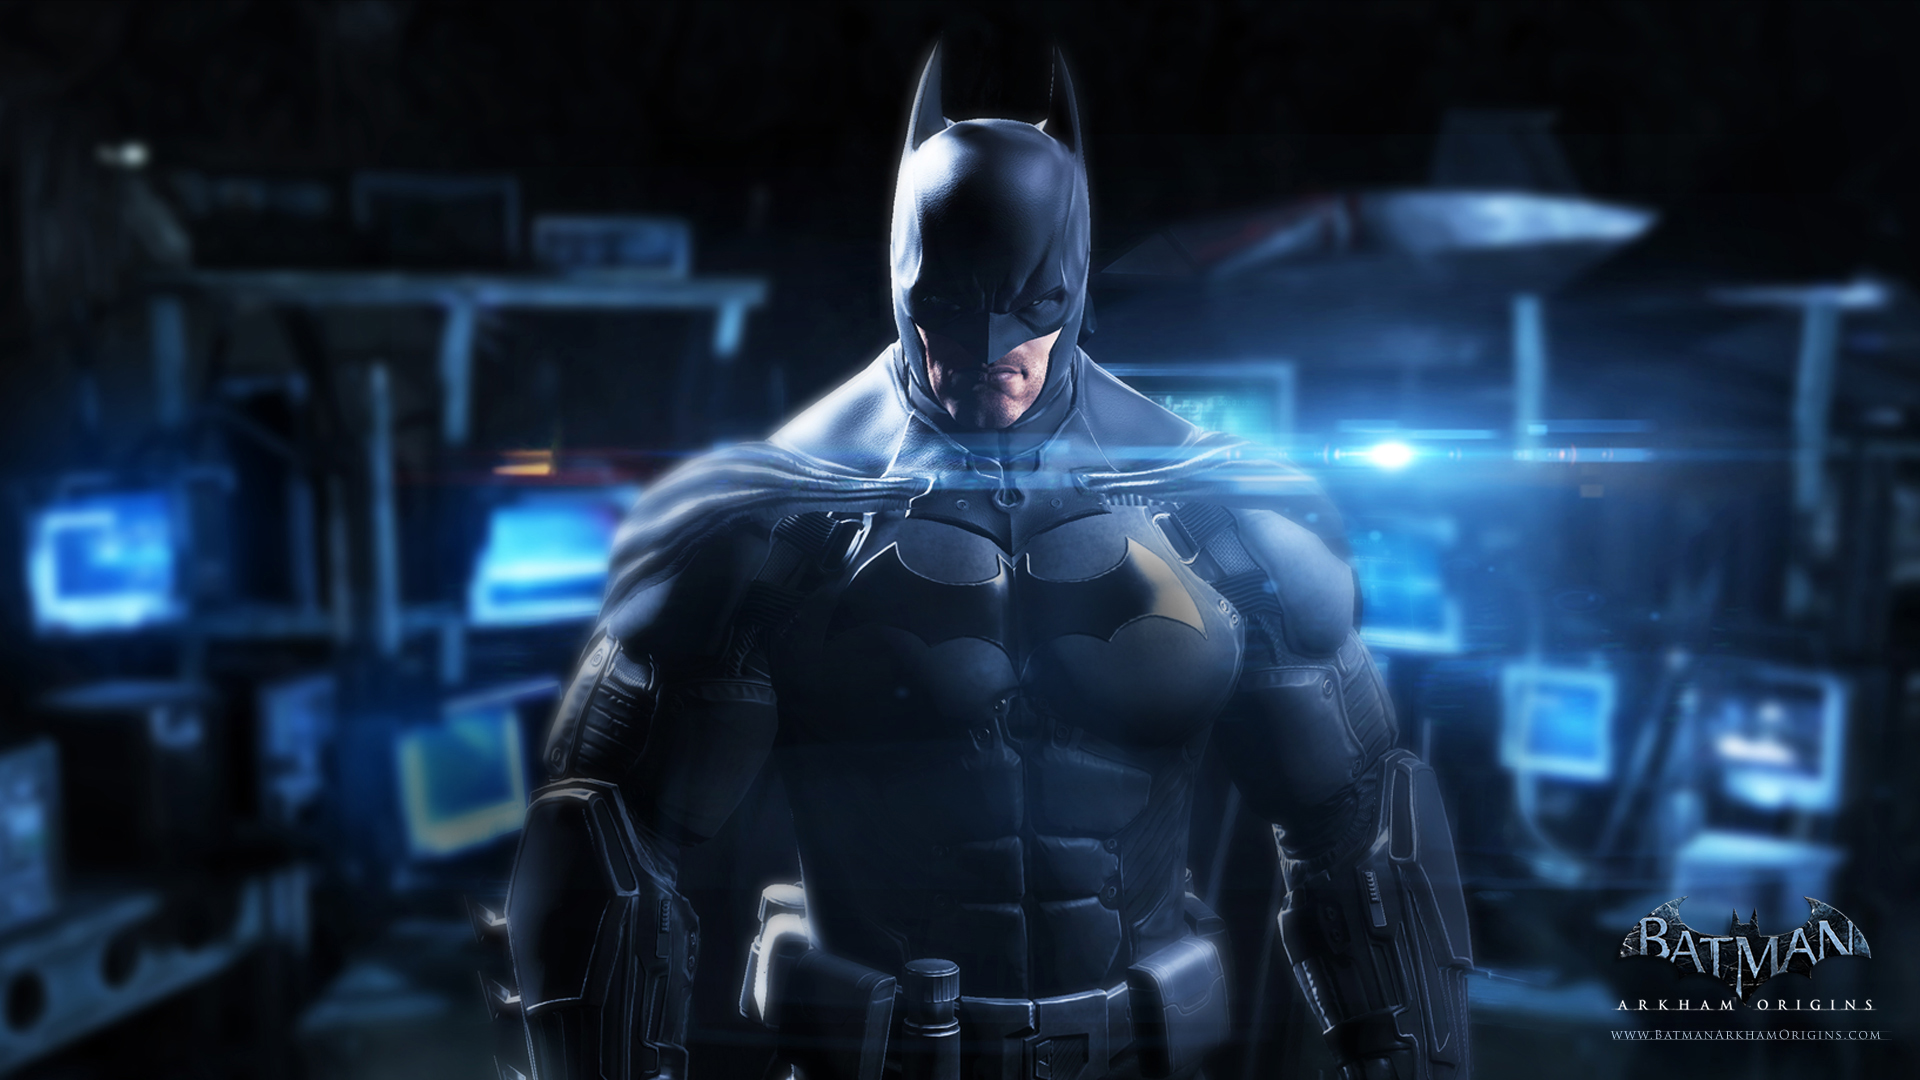 Batman: Arkham Origins wallpapers for desktop, download free Batman: Arkham  Origins pictures and backgrounds for PC 